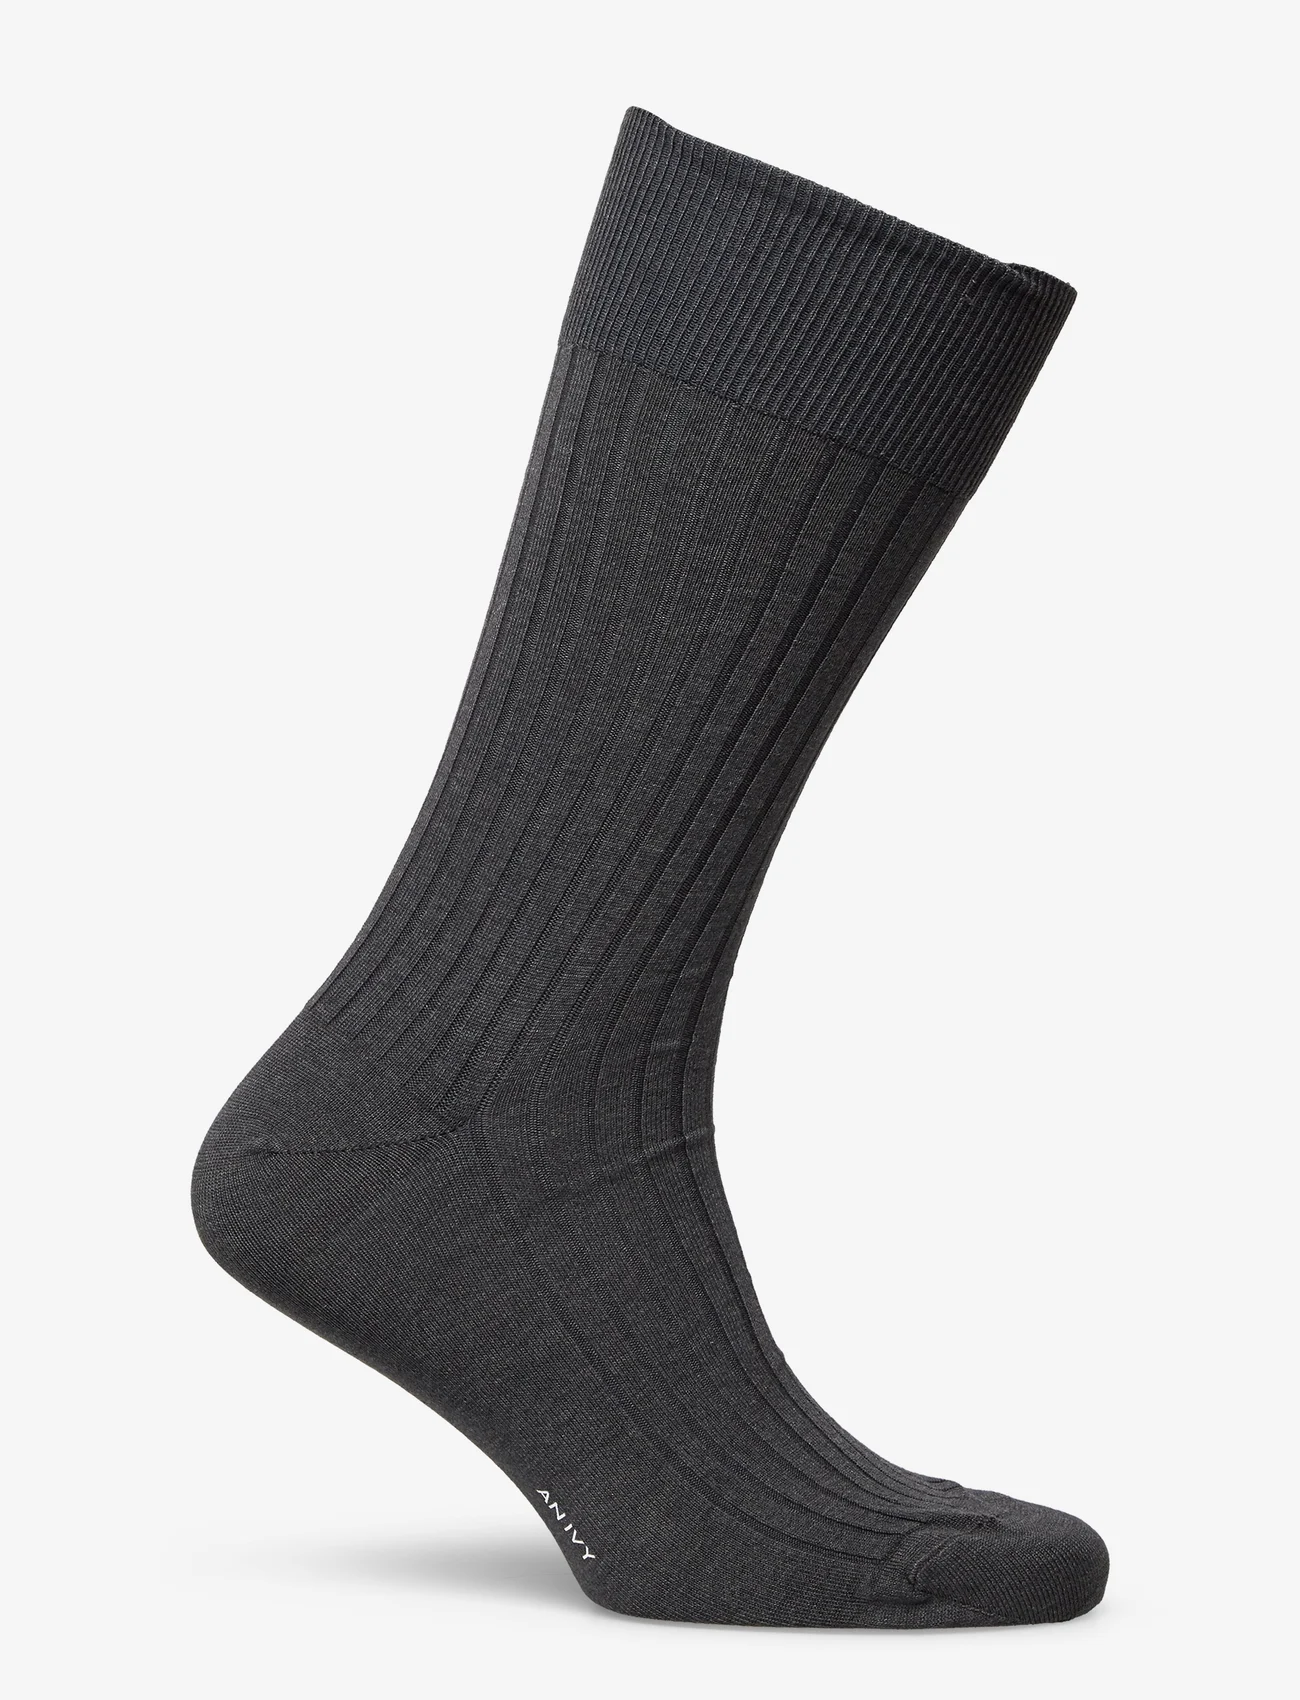 AN IVY - Charcoal Ribbed Socks - grey - 1